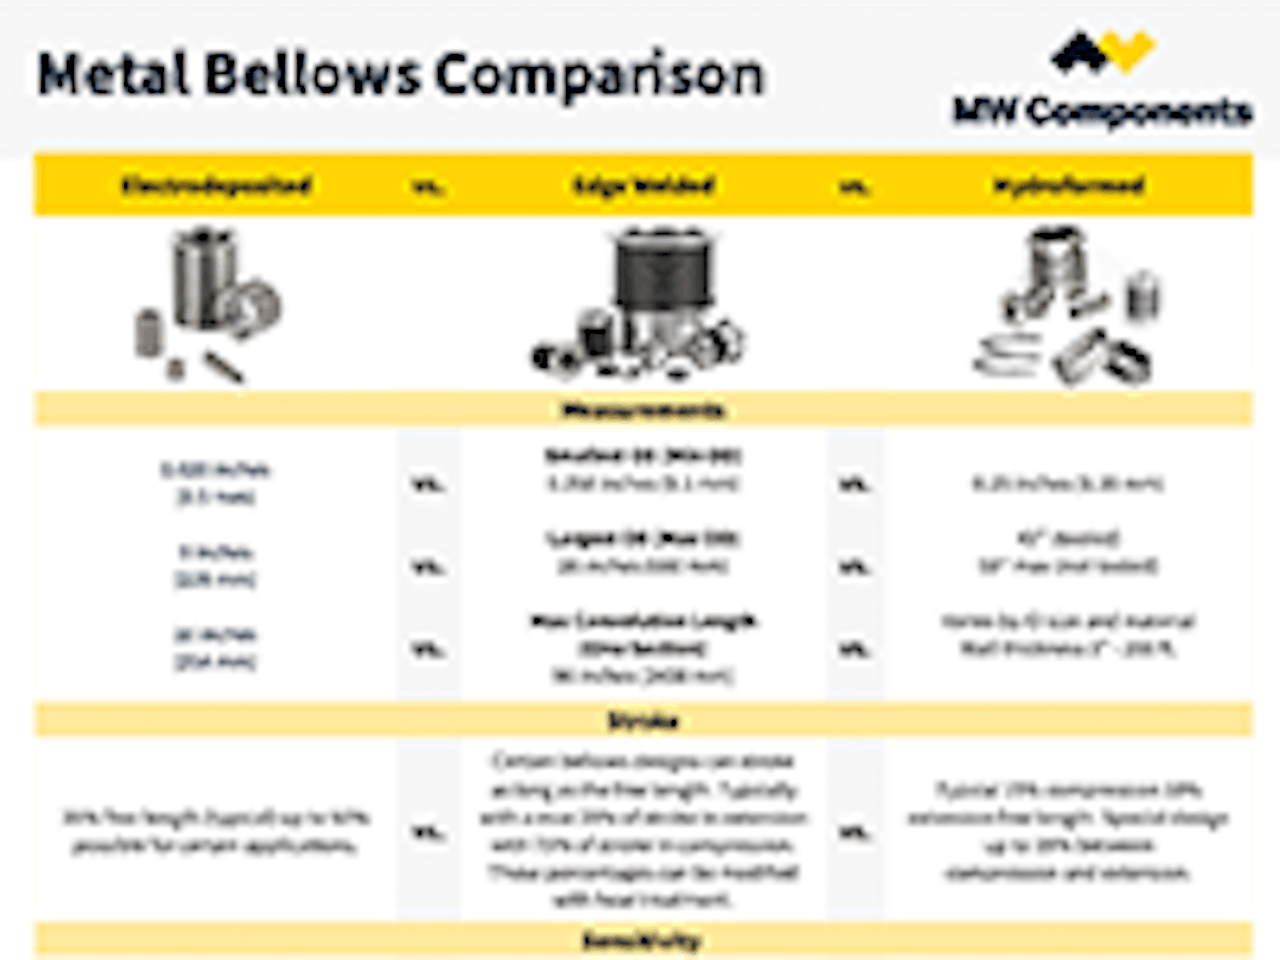 Guide: Metal Bellows Comparison cover